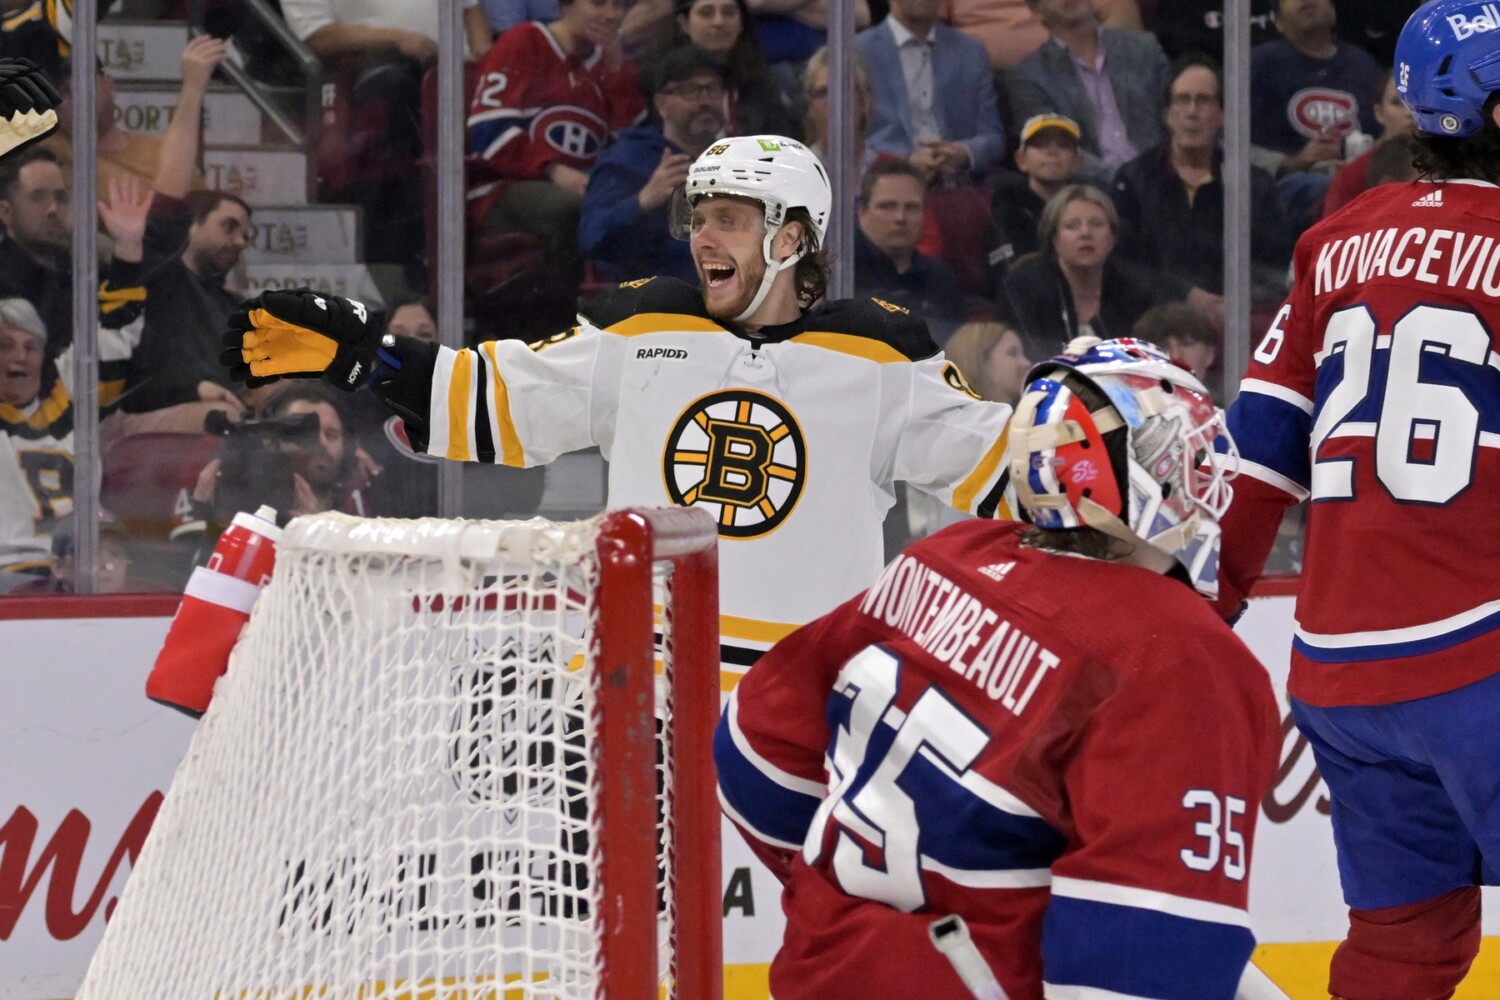 Boston Bruins break NHL record with 63 wins in a season